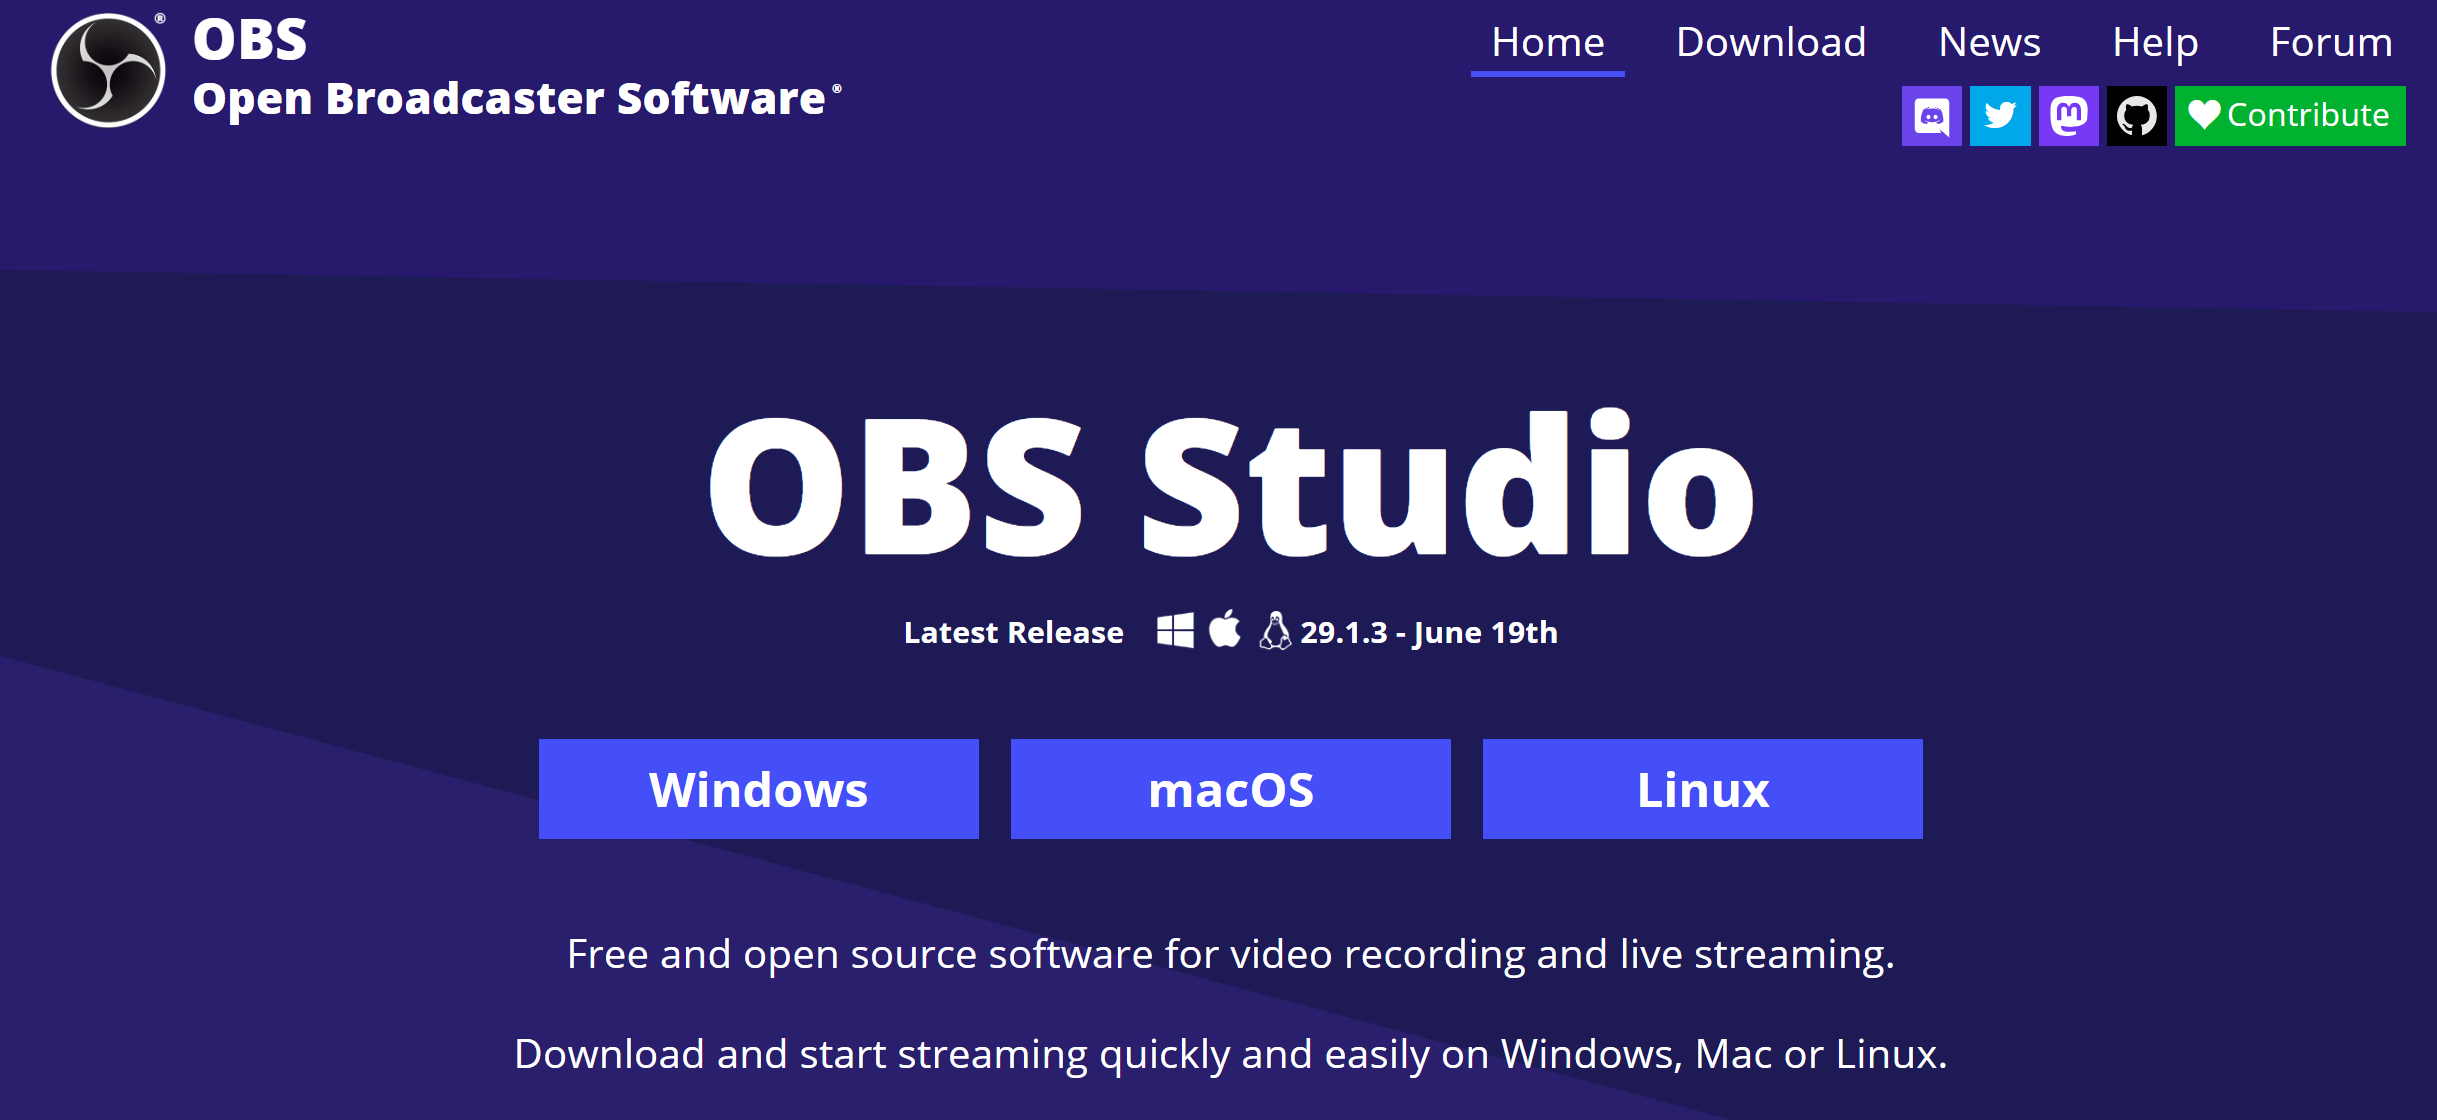 OBS Studio screen capture software